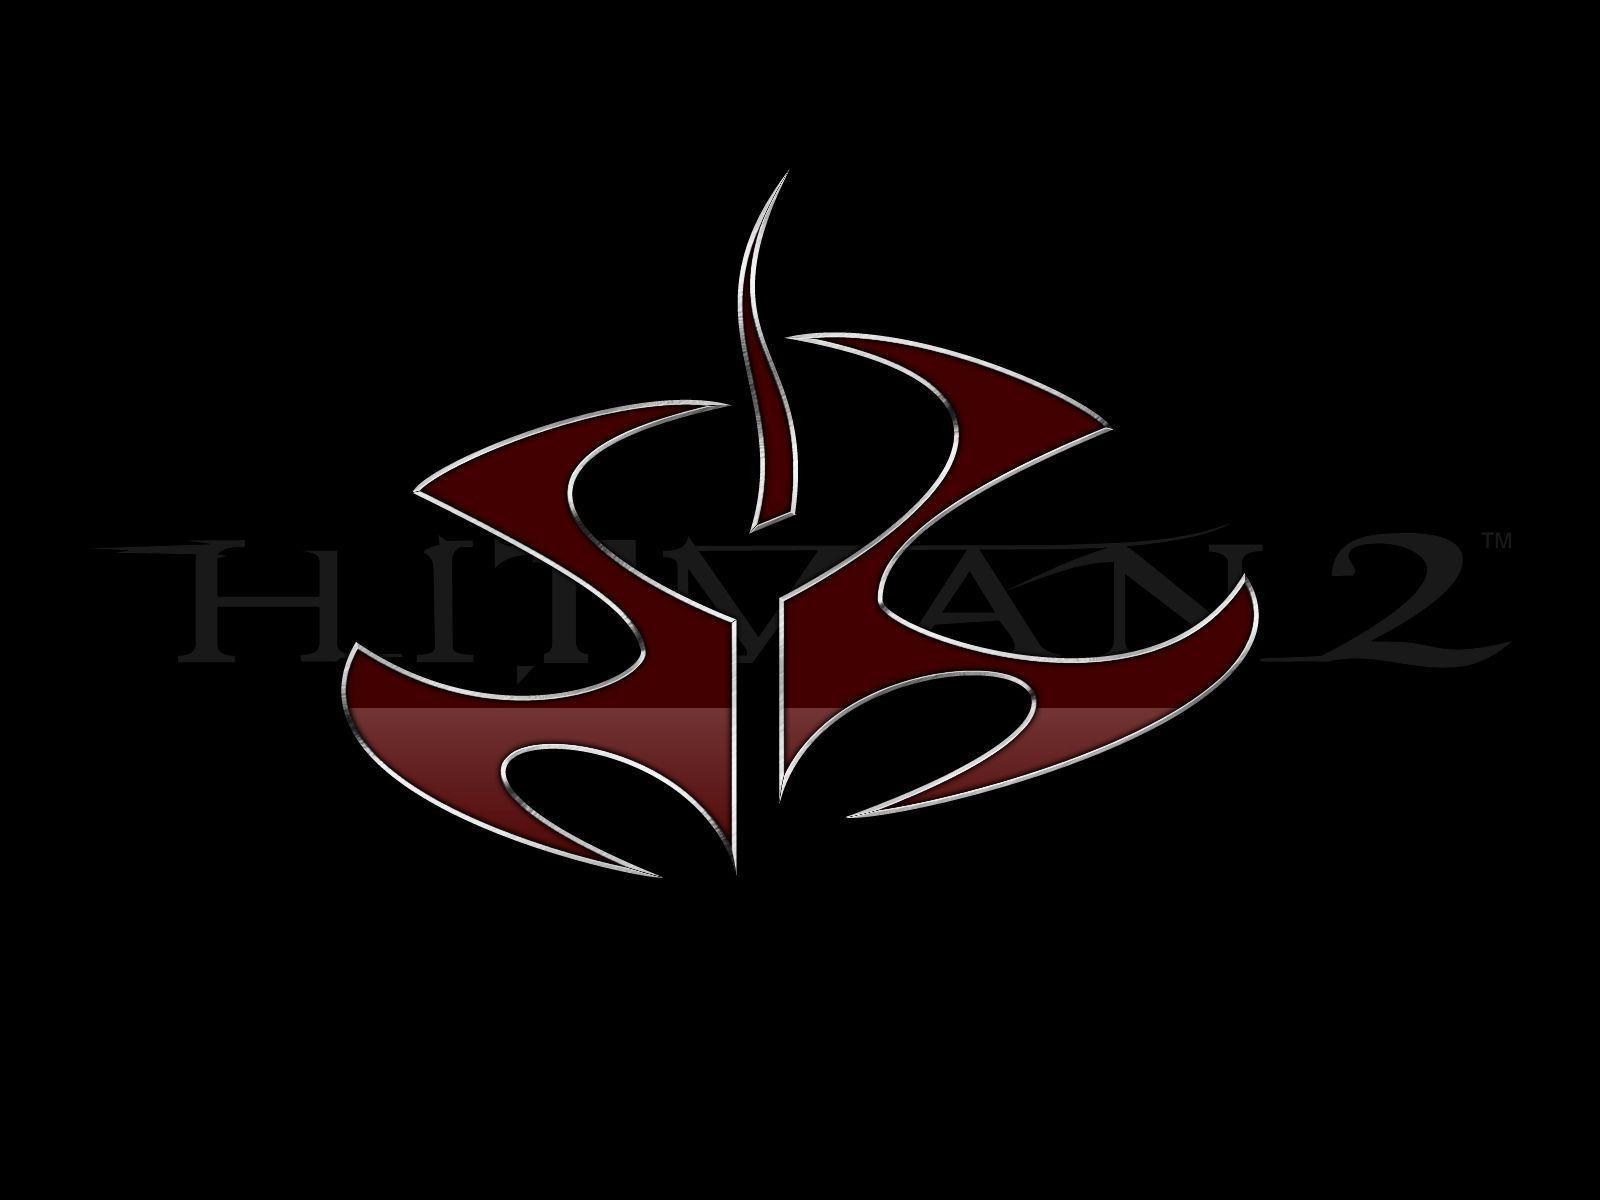 Download Hitman Logo wallpaper to your cell phone hitman logo. HD